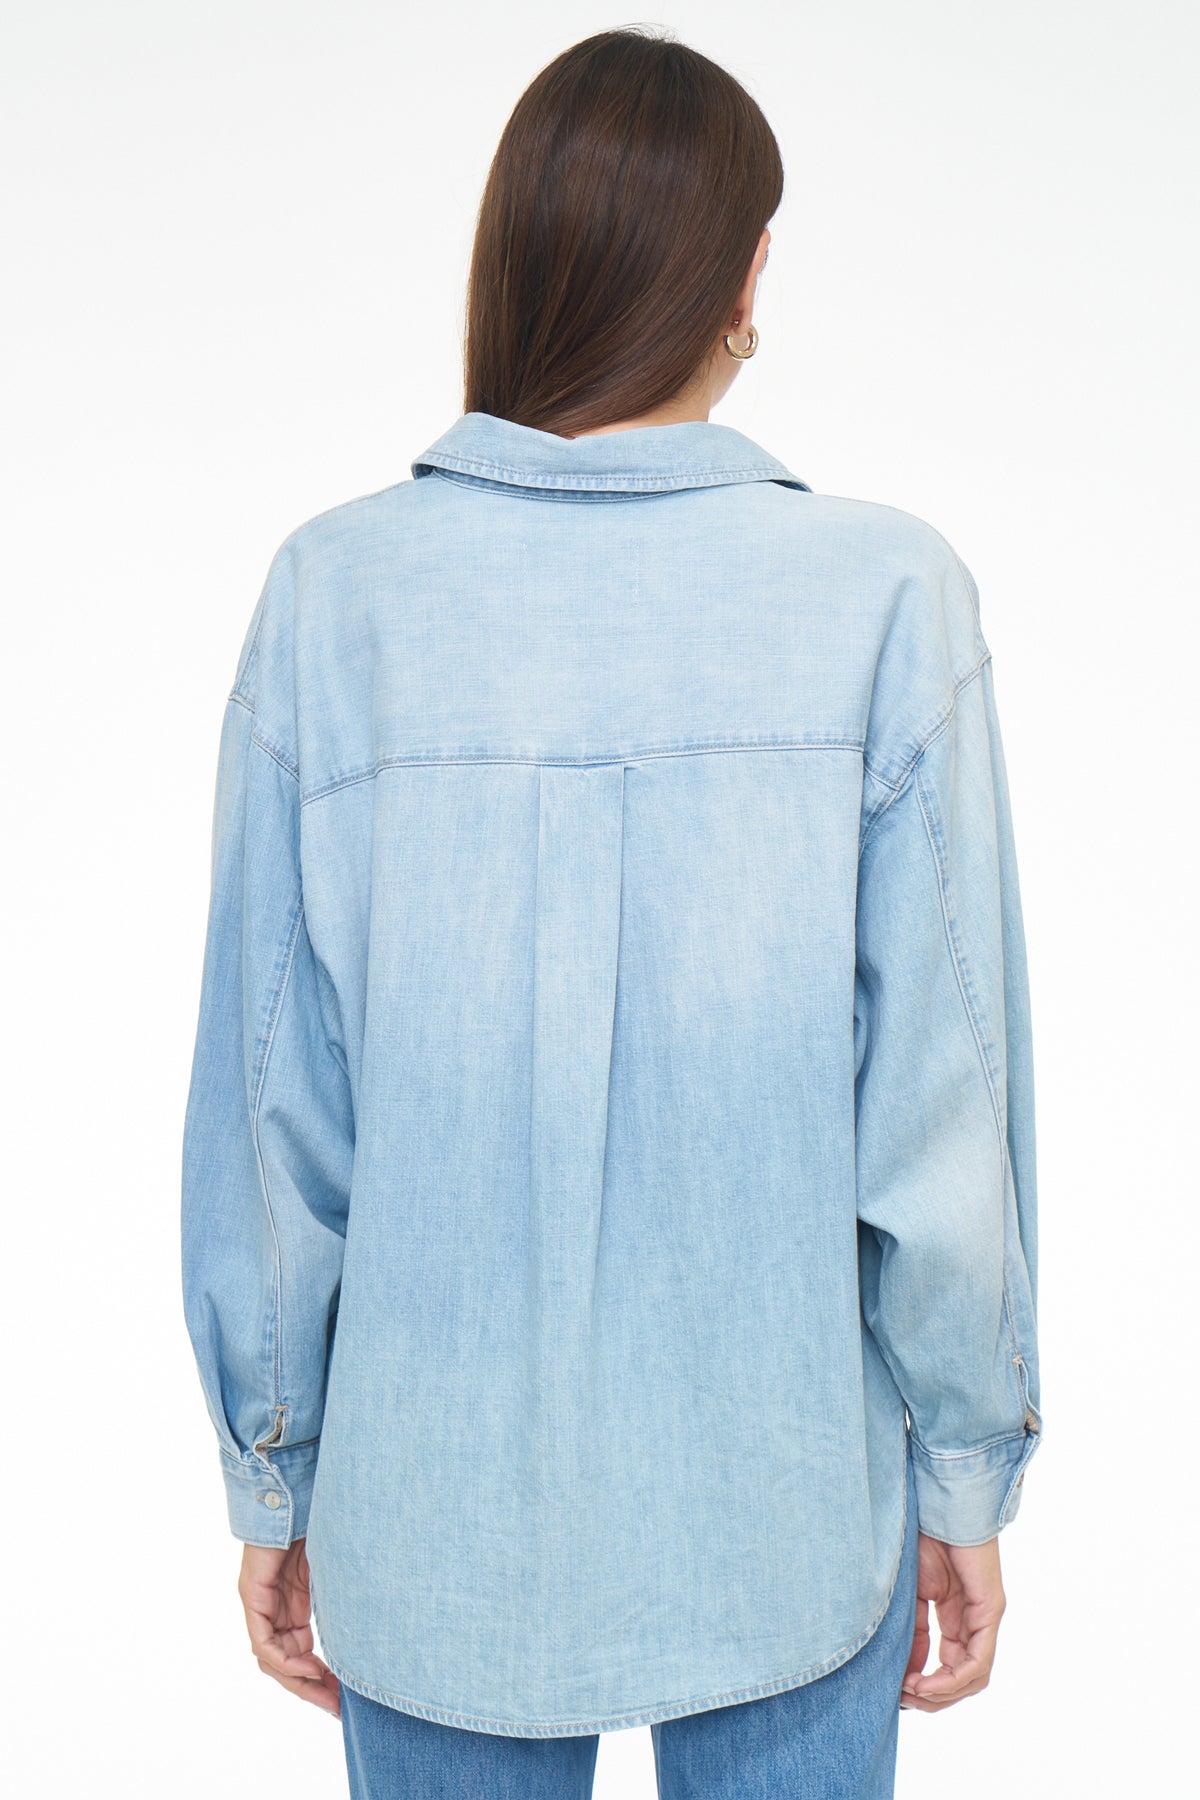 Sloane Long Sleeve Oversized Button Down Shirt - Edgewater